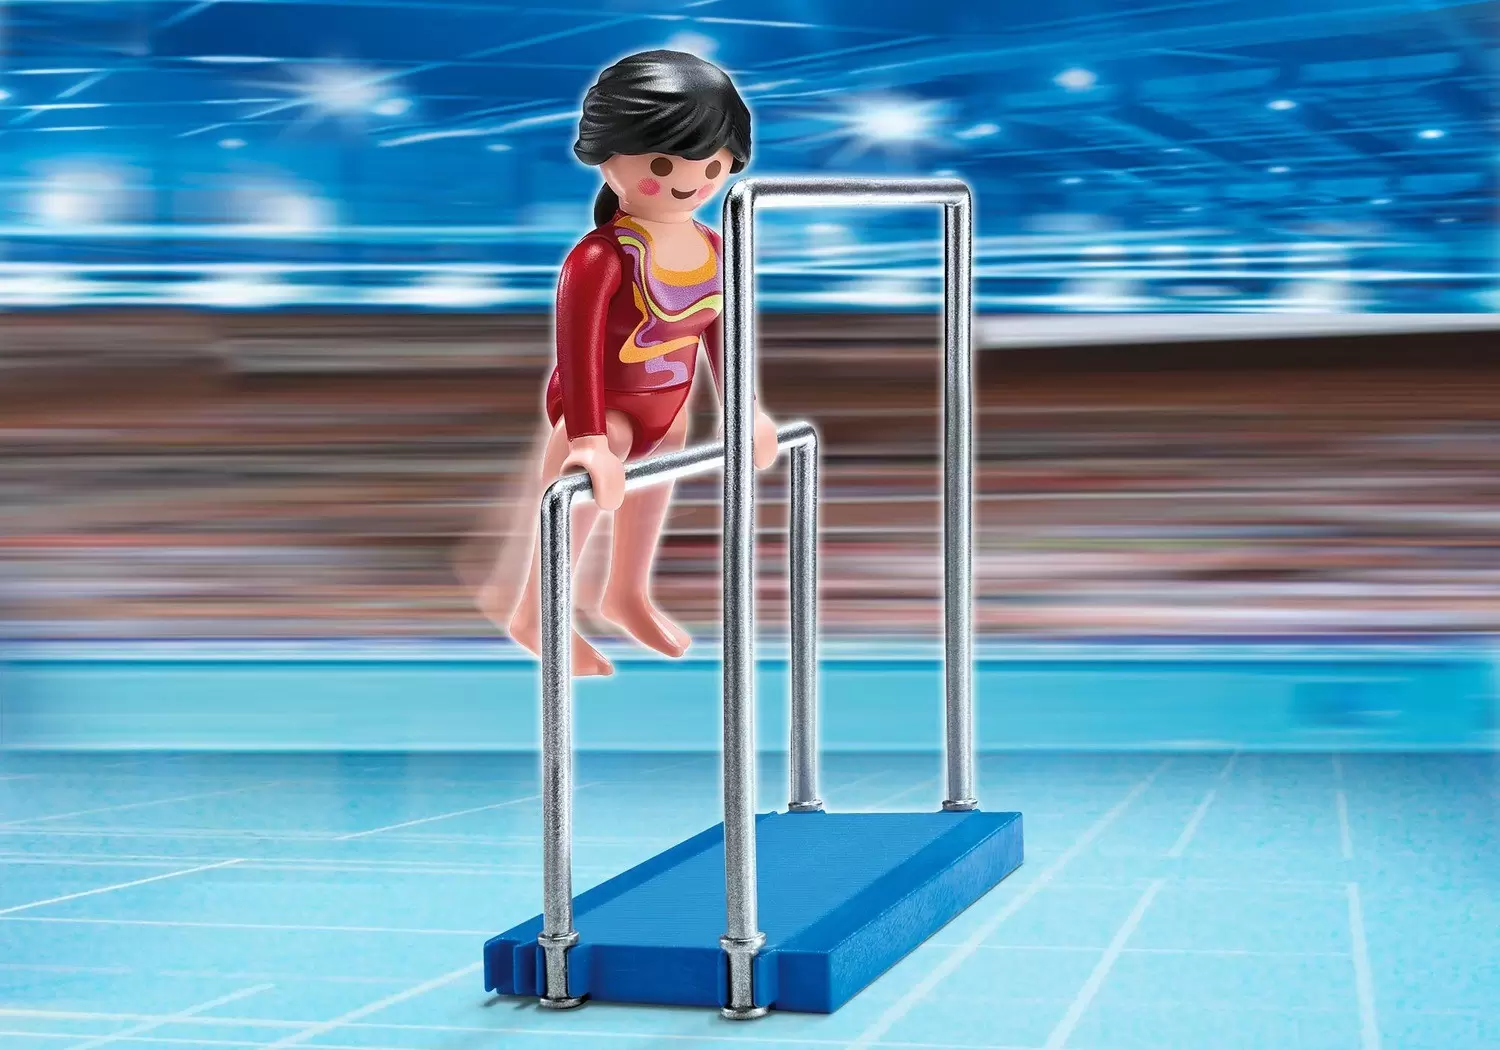 Playmobil Sports - Gymnast on Asymetric Bars